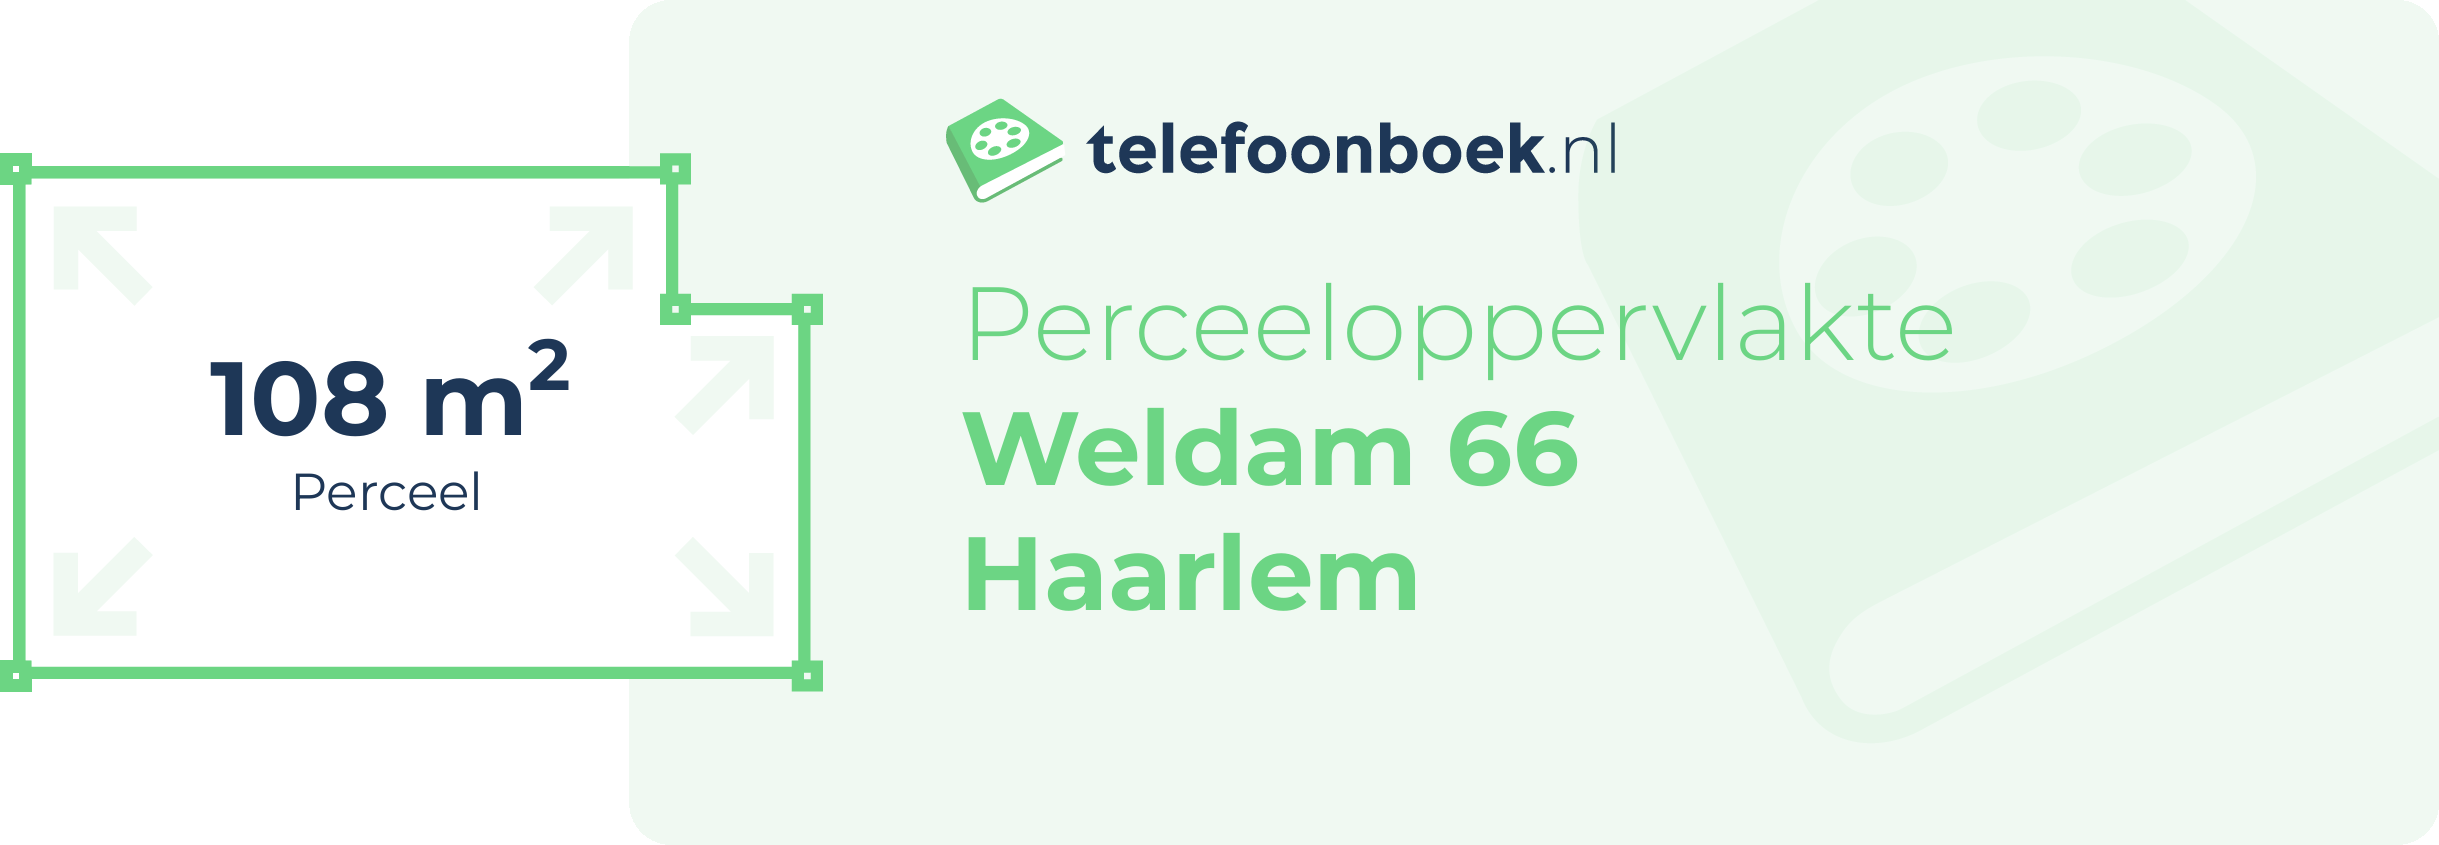 Perceeloppervlakte Weldam 66 Haarlem